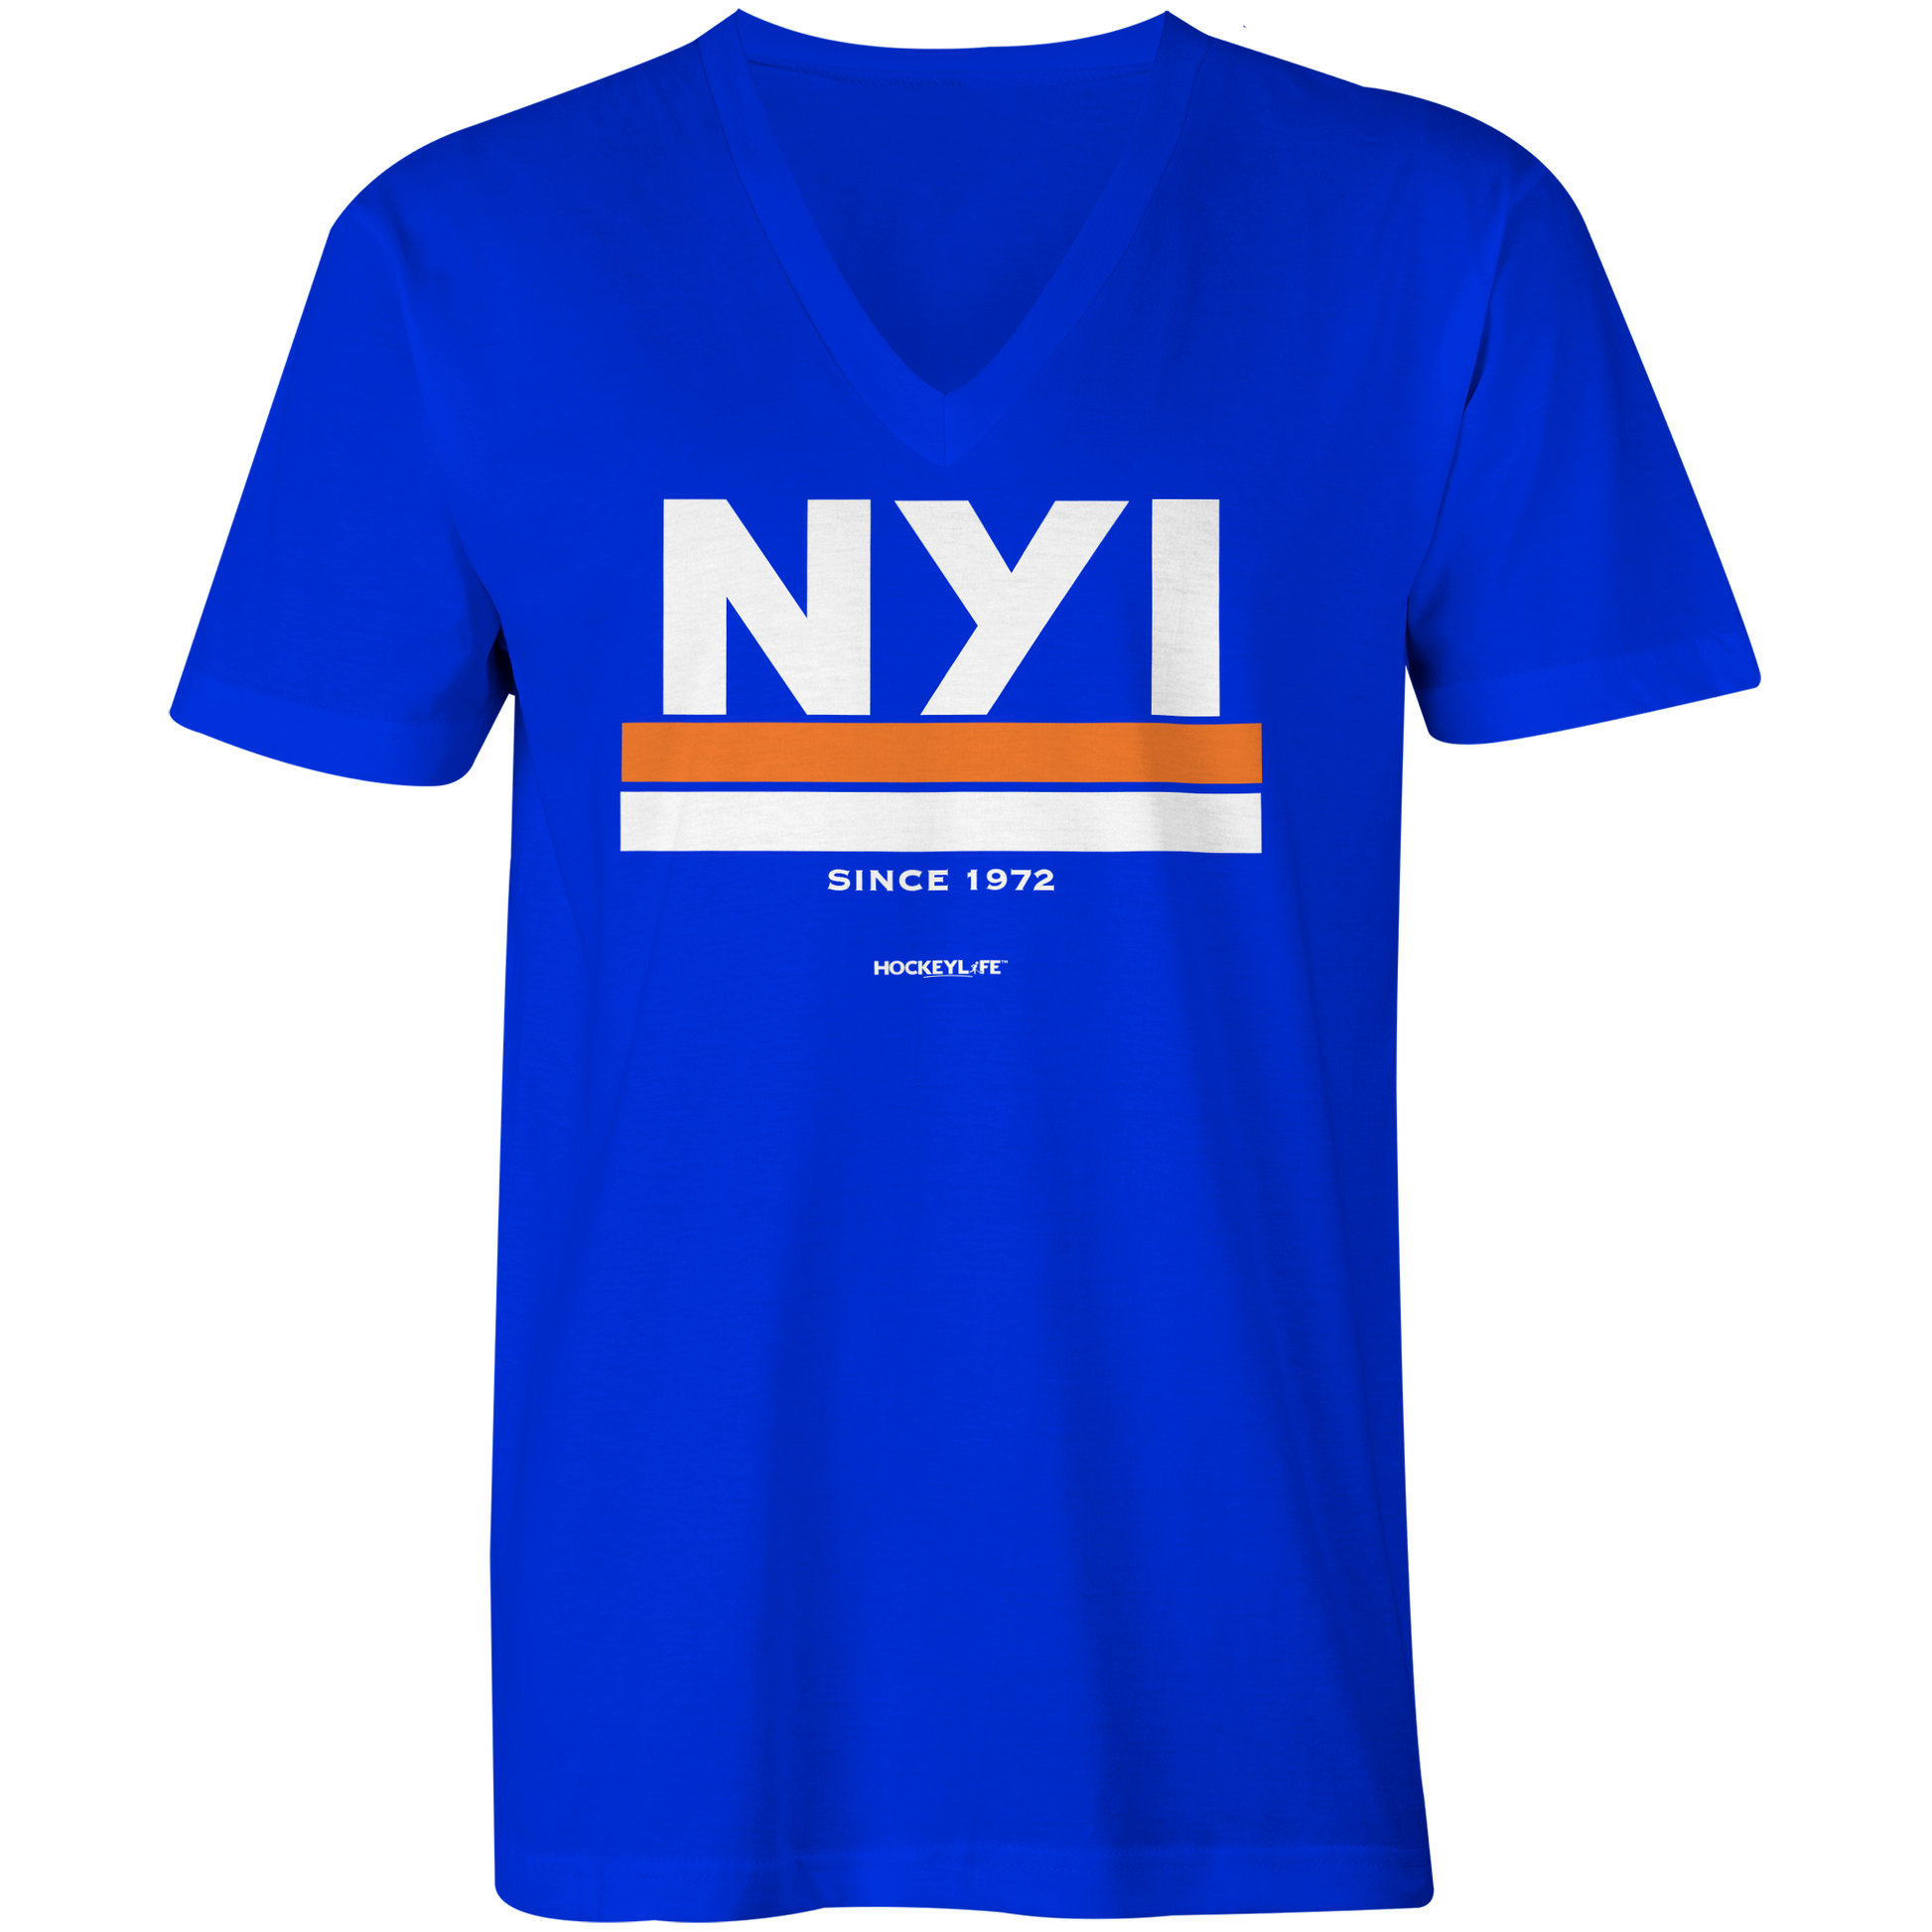 New York Islanders Gear, Islanders Jerseys, New York Islanders Apparel